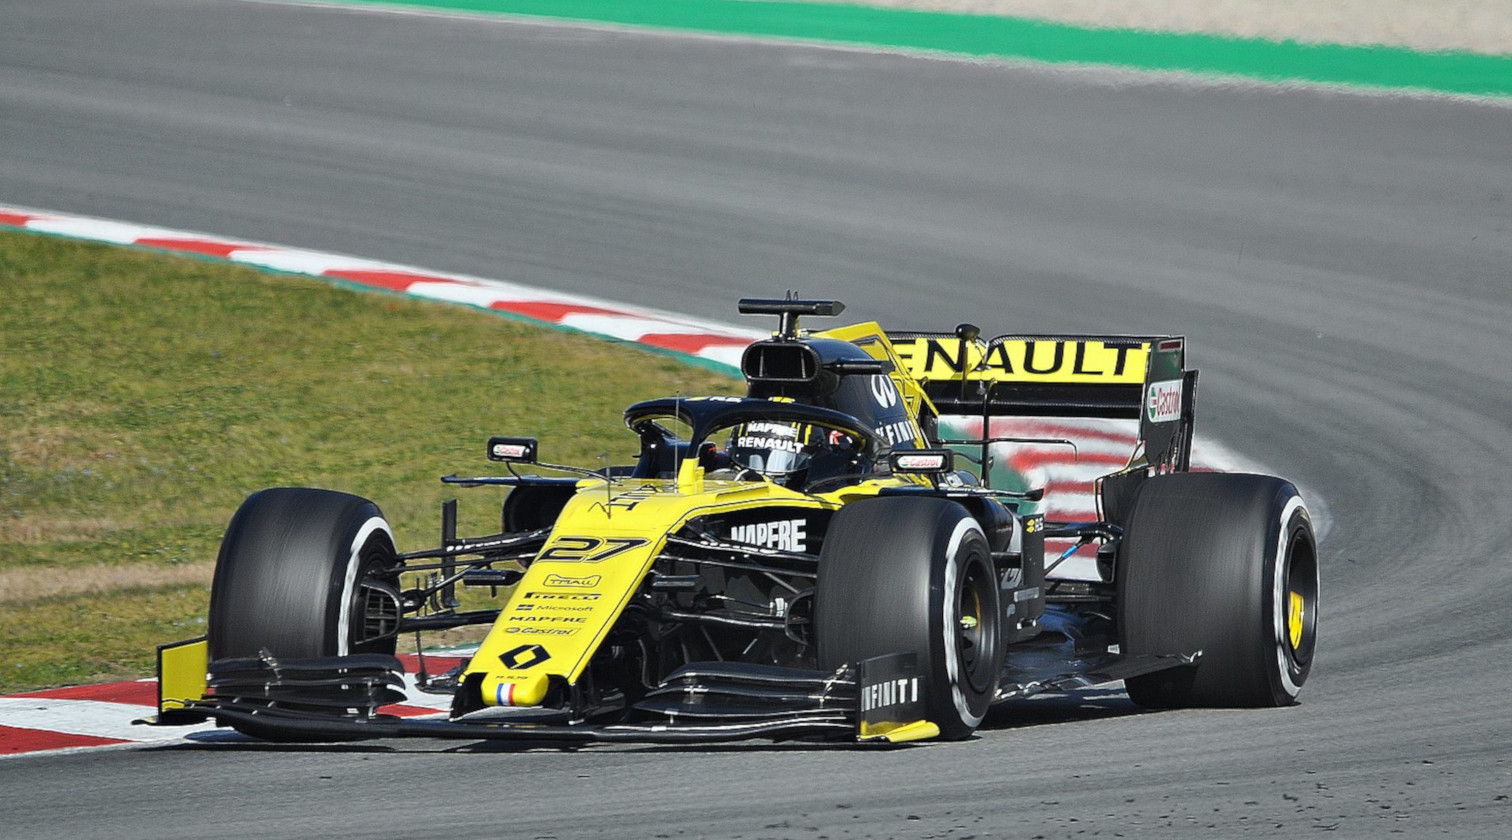 Nico Hülkenberg testing his Renault F1 car